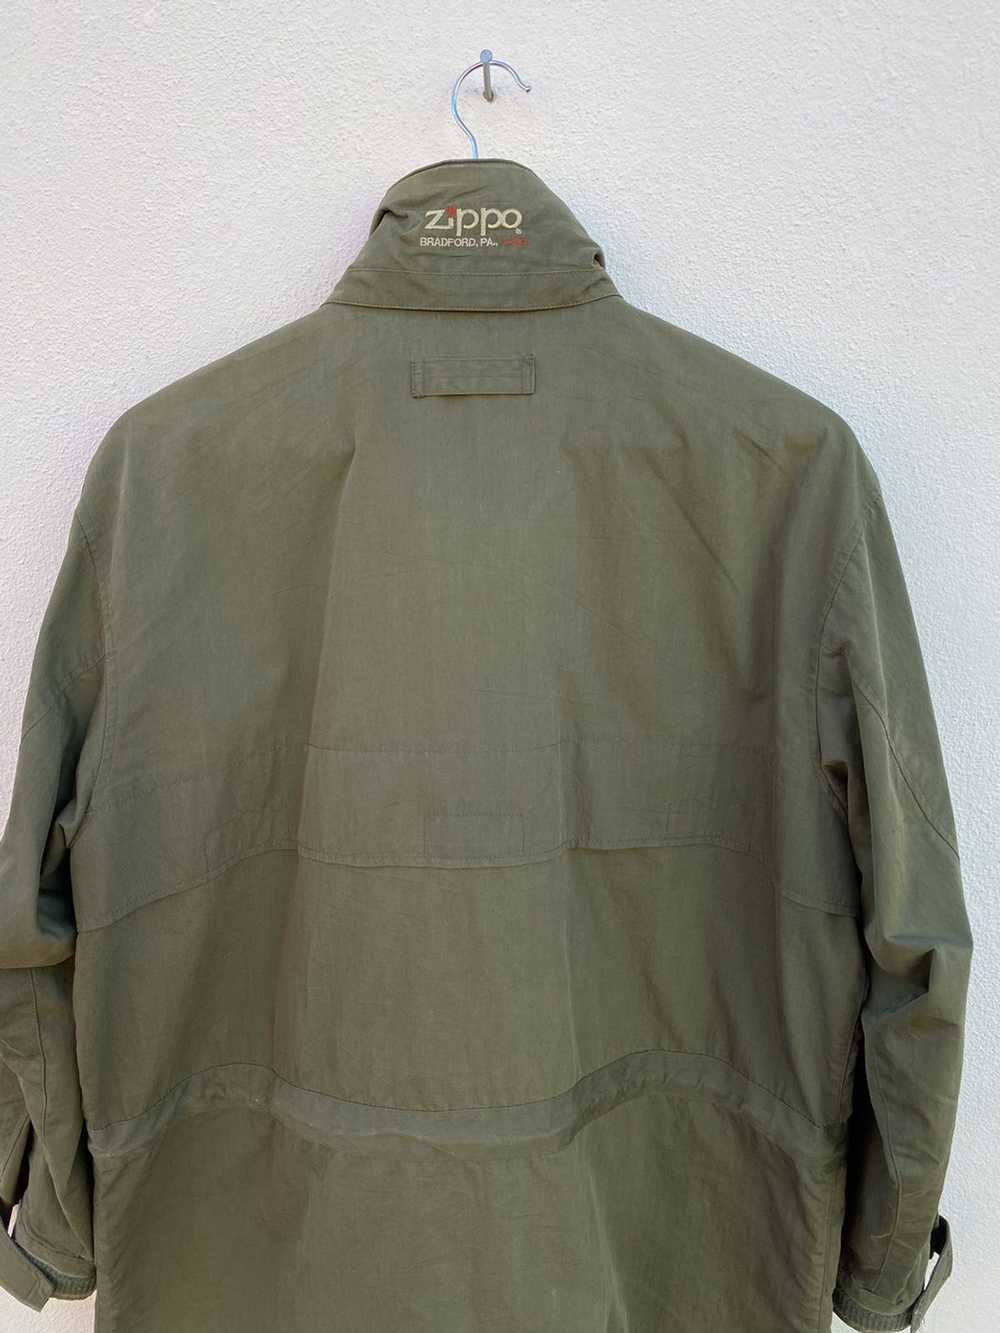 Vintage × Zippo Vintage zippo army parkas jacket - image 4